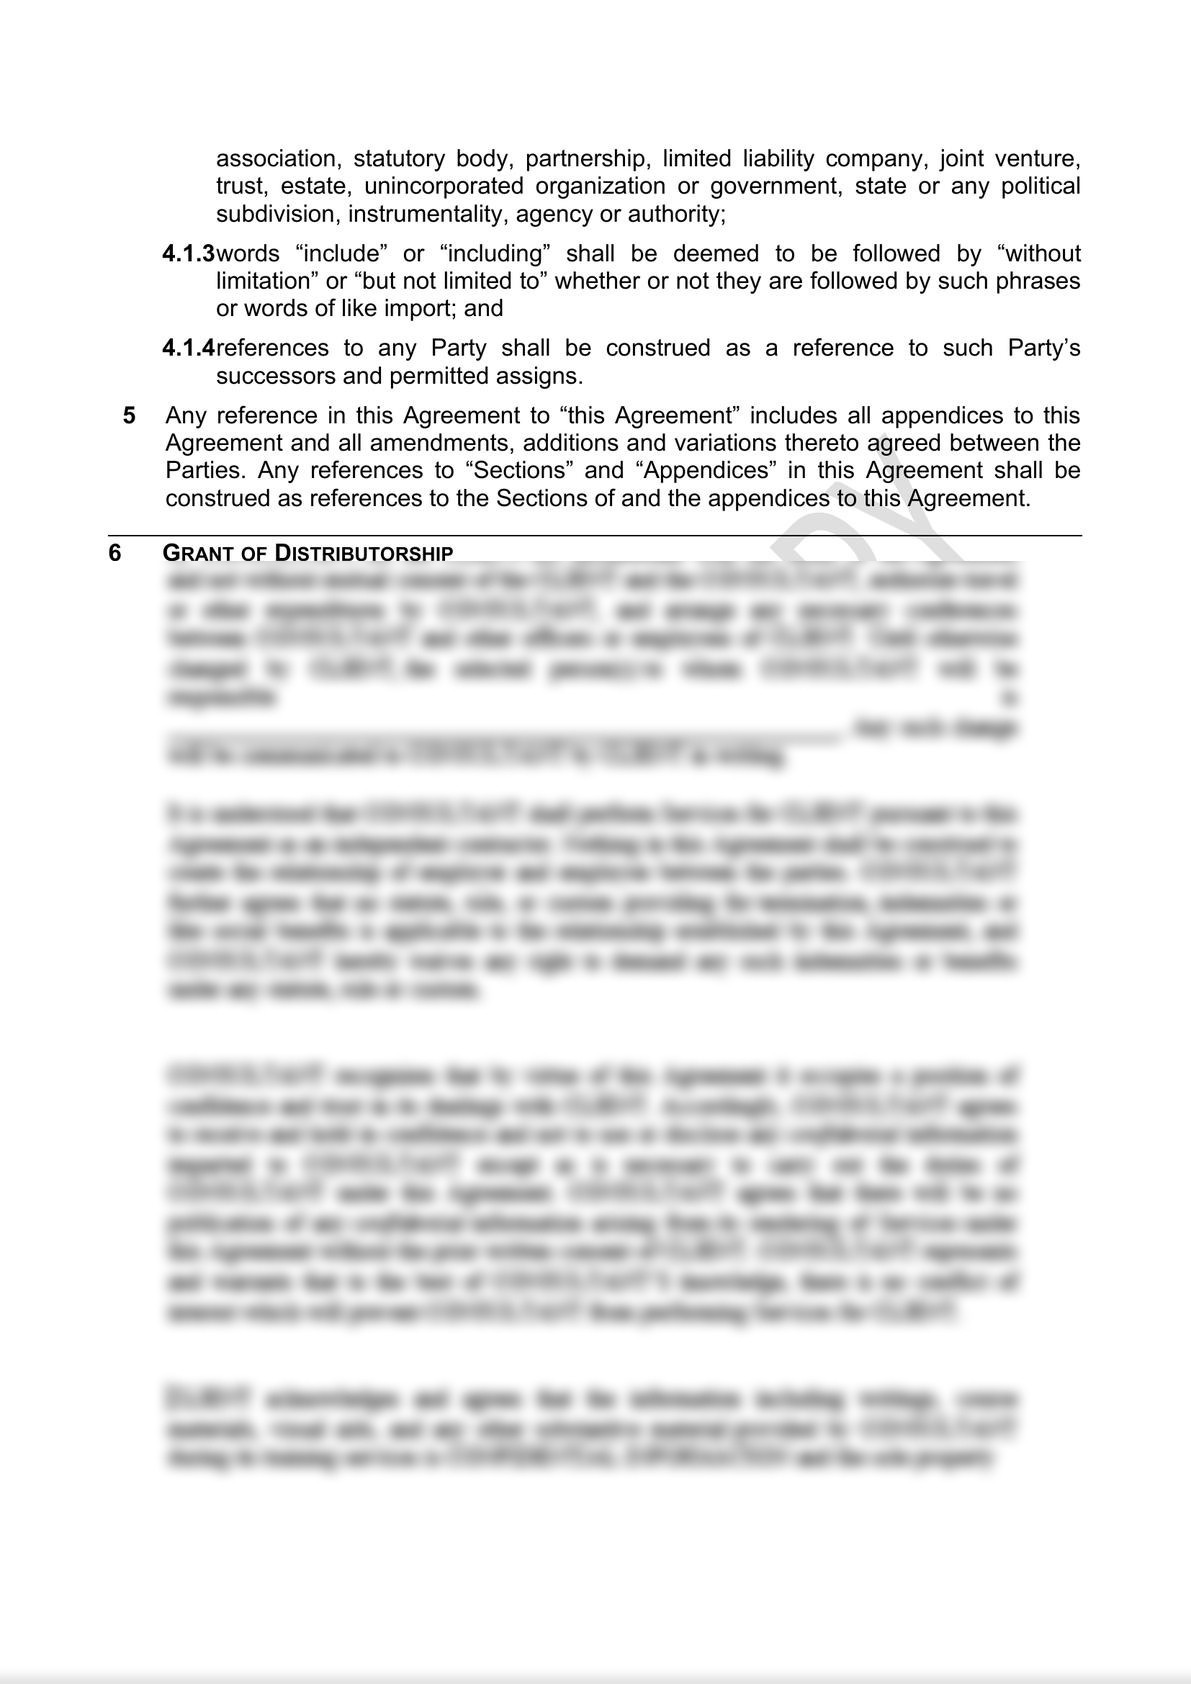 Distribution Agreement Draft (ii)-5